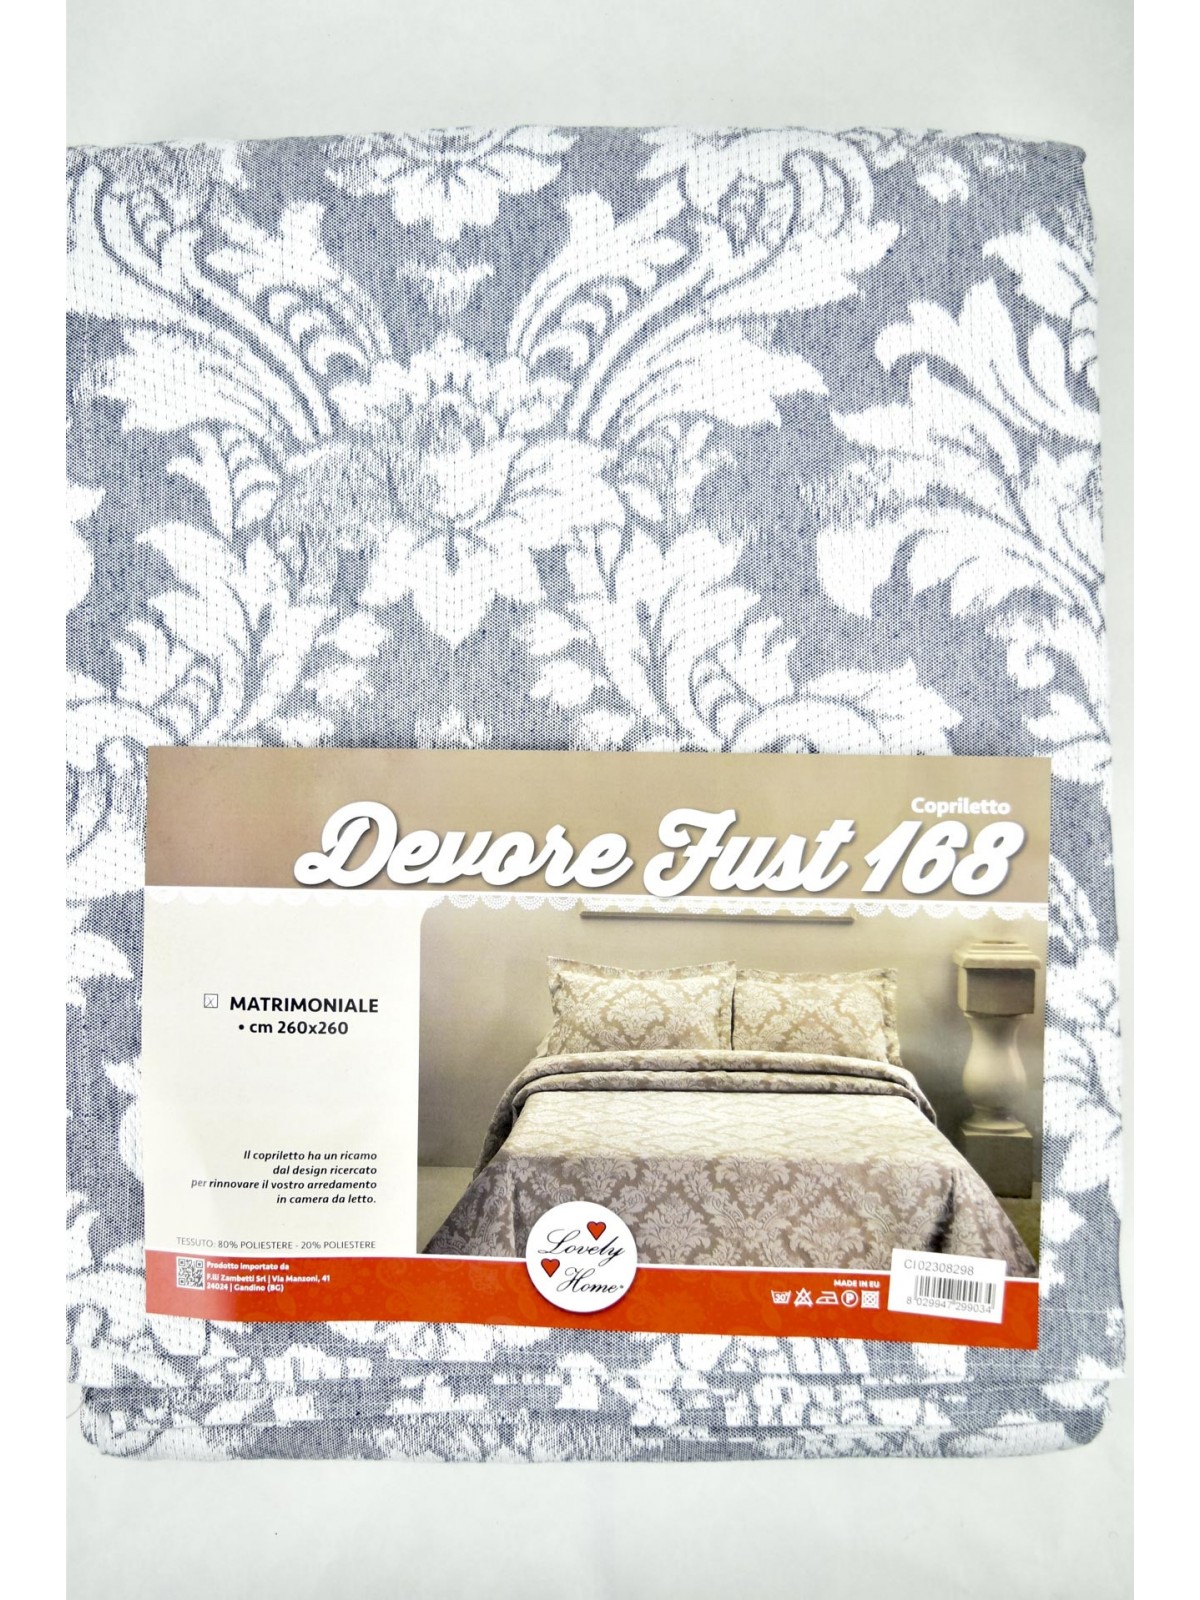 Bedspread, Light Curtain, burn-out design Arabesque